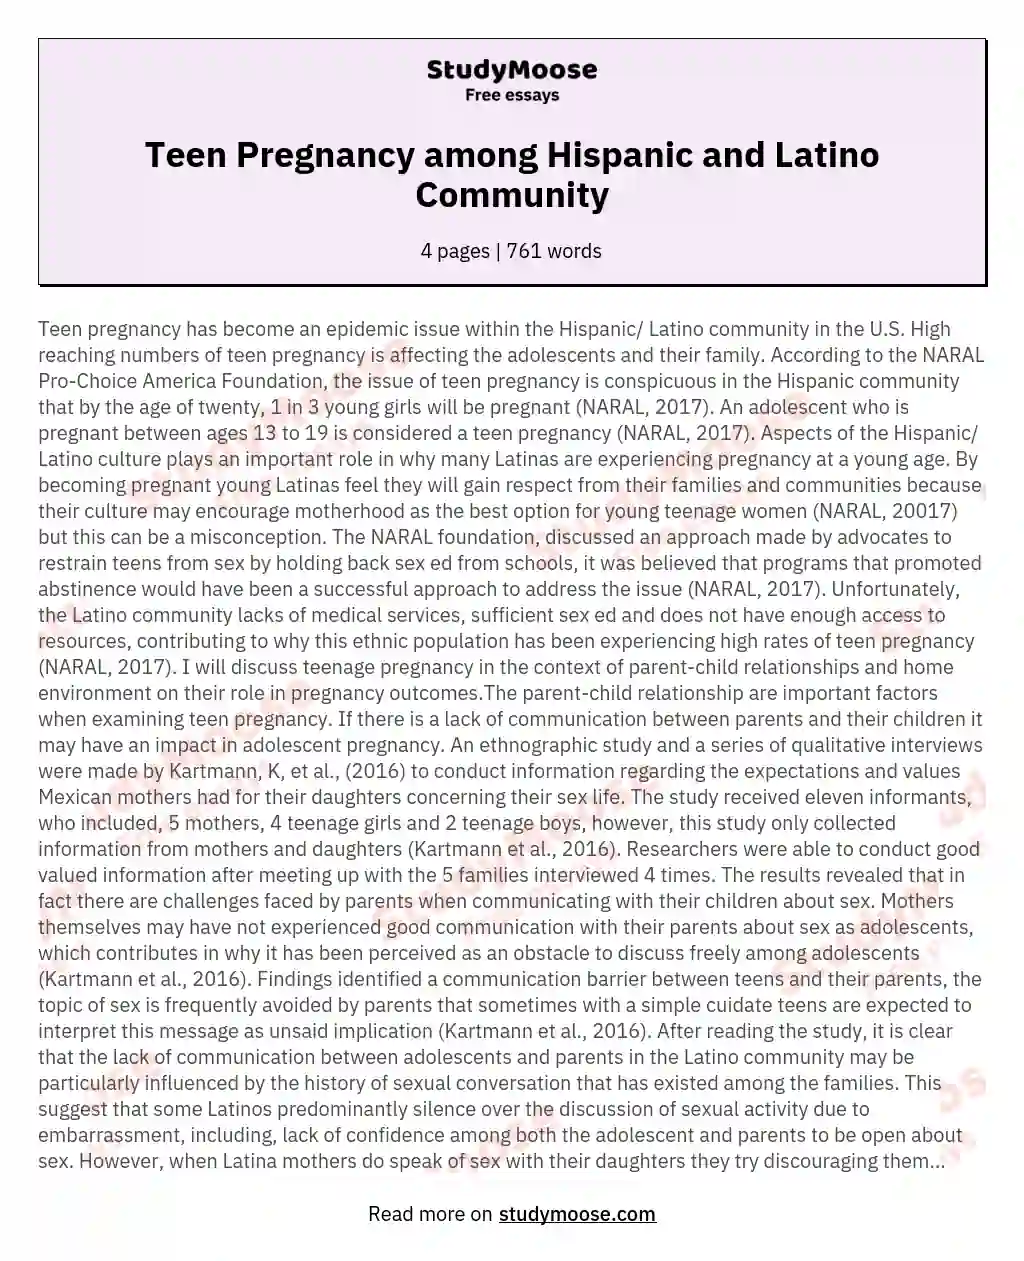 Teen Pregnancy among Hispanic and Latino Community essay